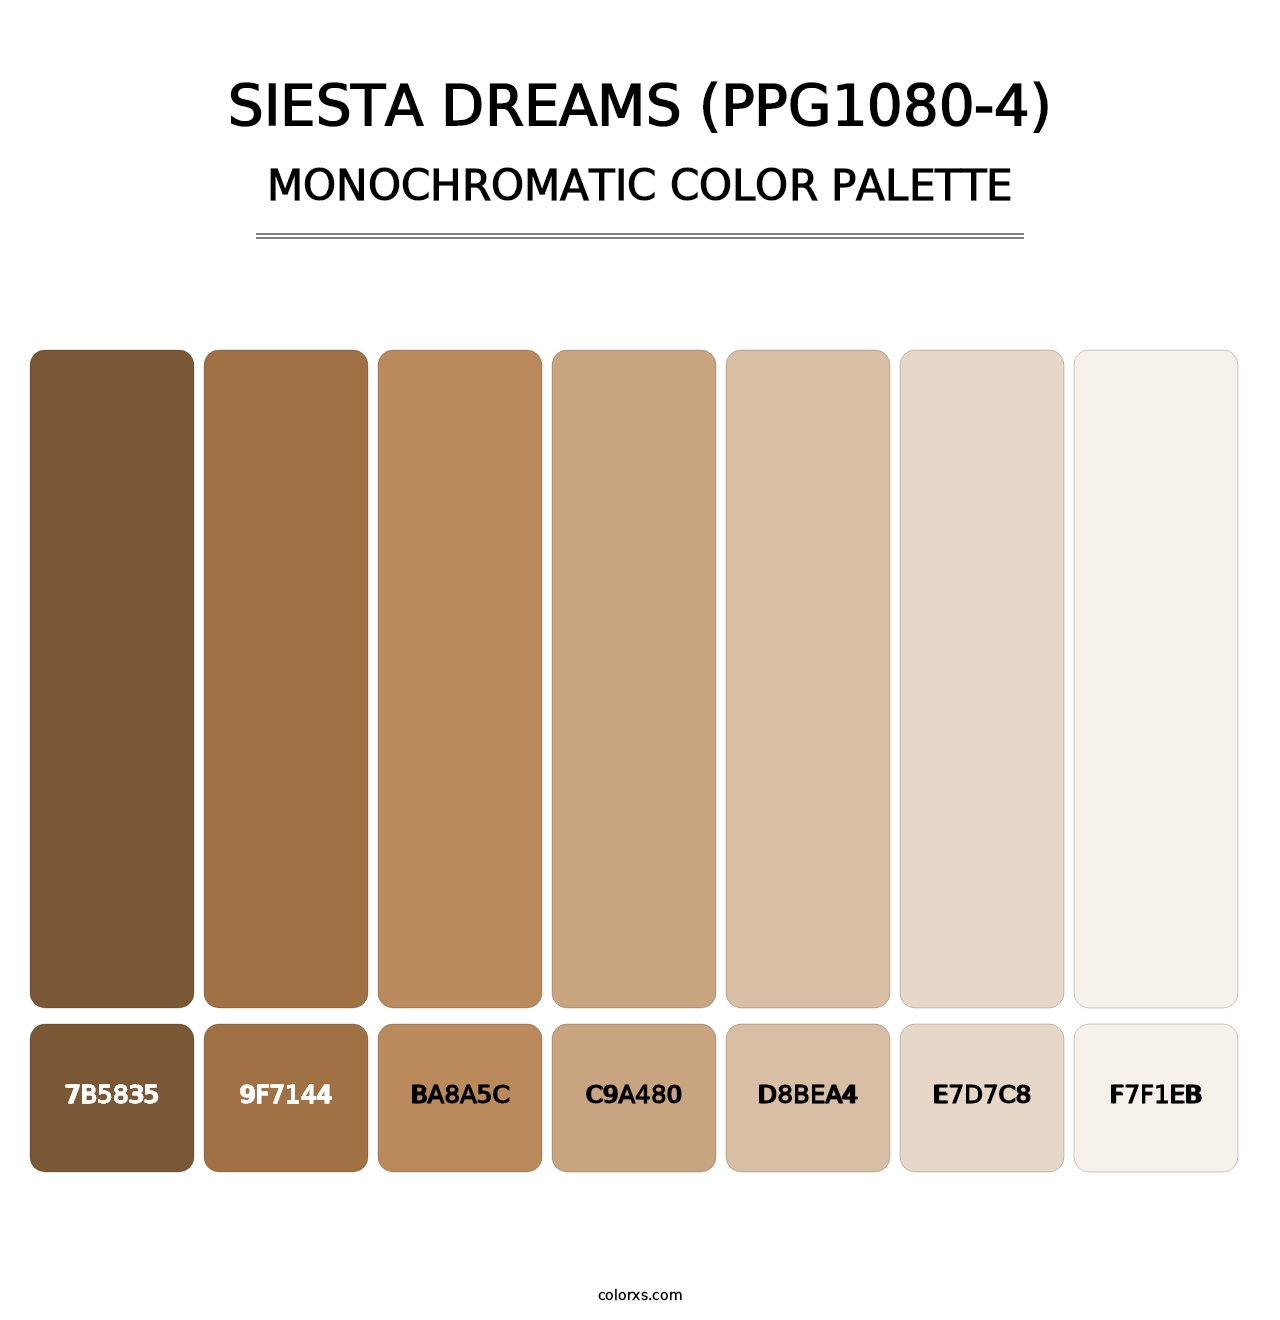 Siesta Dreams (PPG1080-4) - Monochromatic Color Palette